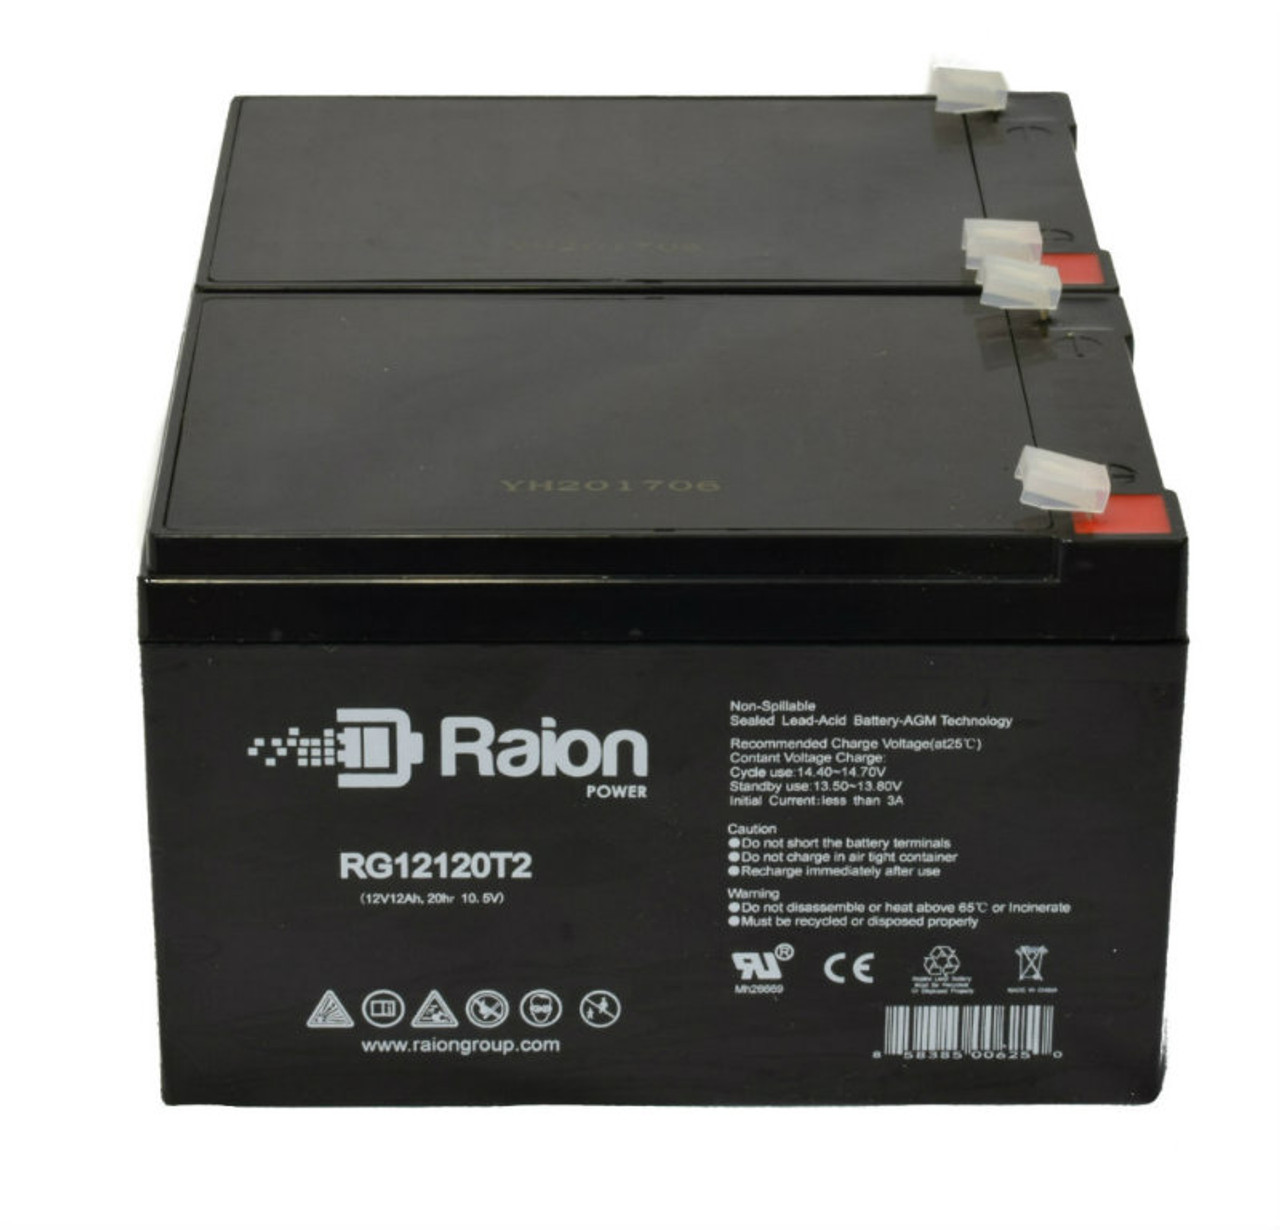 Raion Power 12V 12Ah Non-Spillable Compatible Replacement Battery for IZIP MTNAL24V450 - (2 Pack)